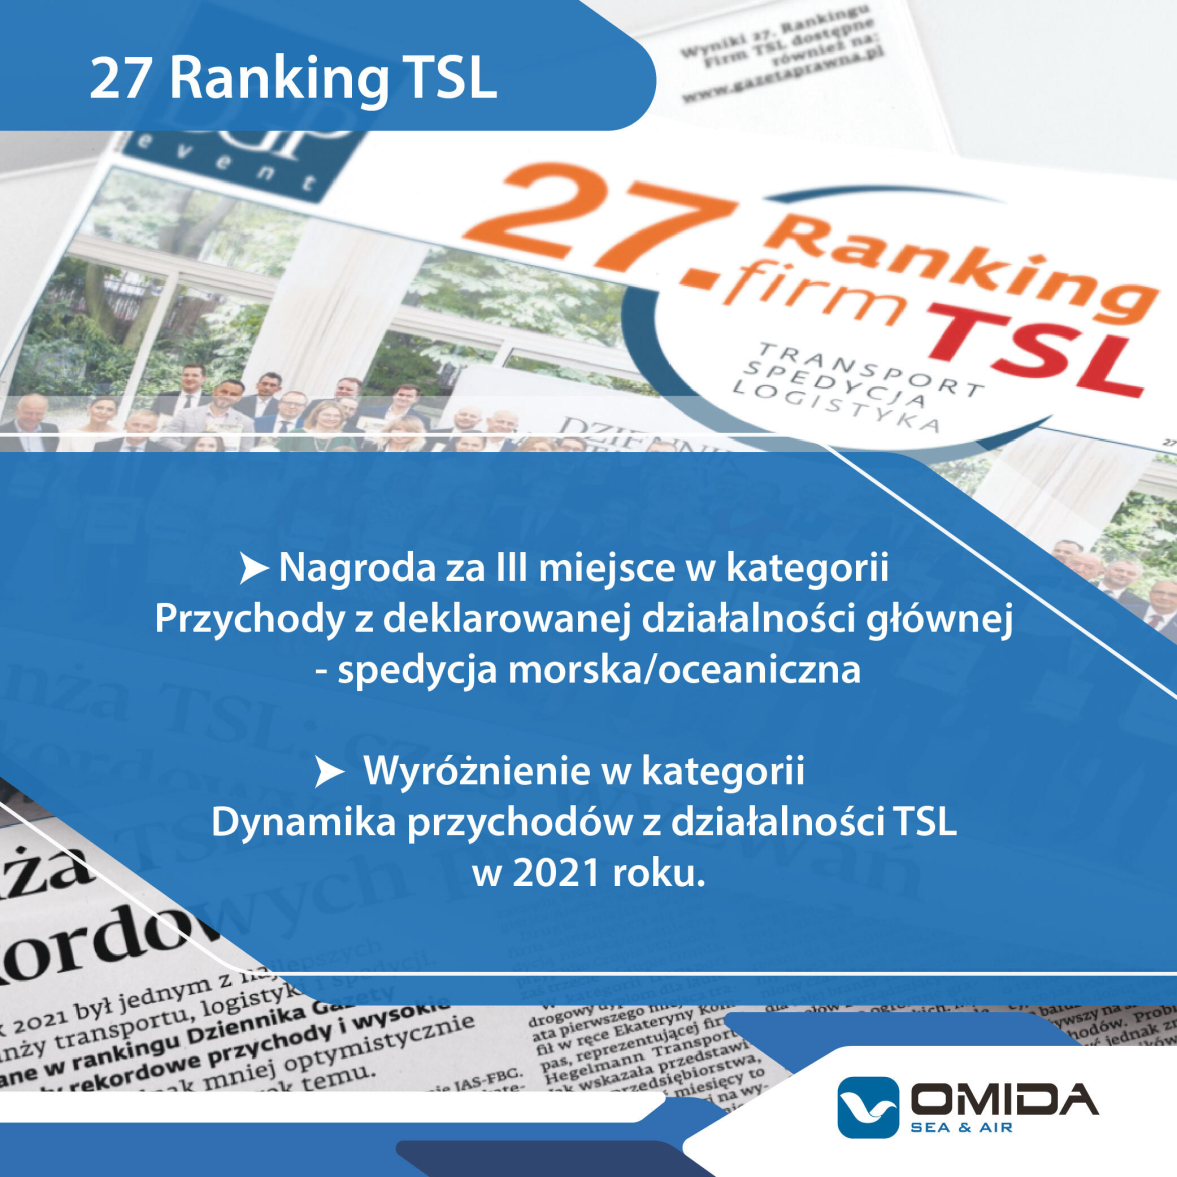 27 Ranking TSL | Omida Sea And Air S.A.